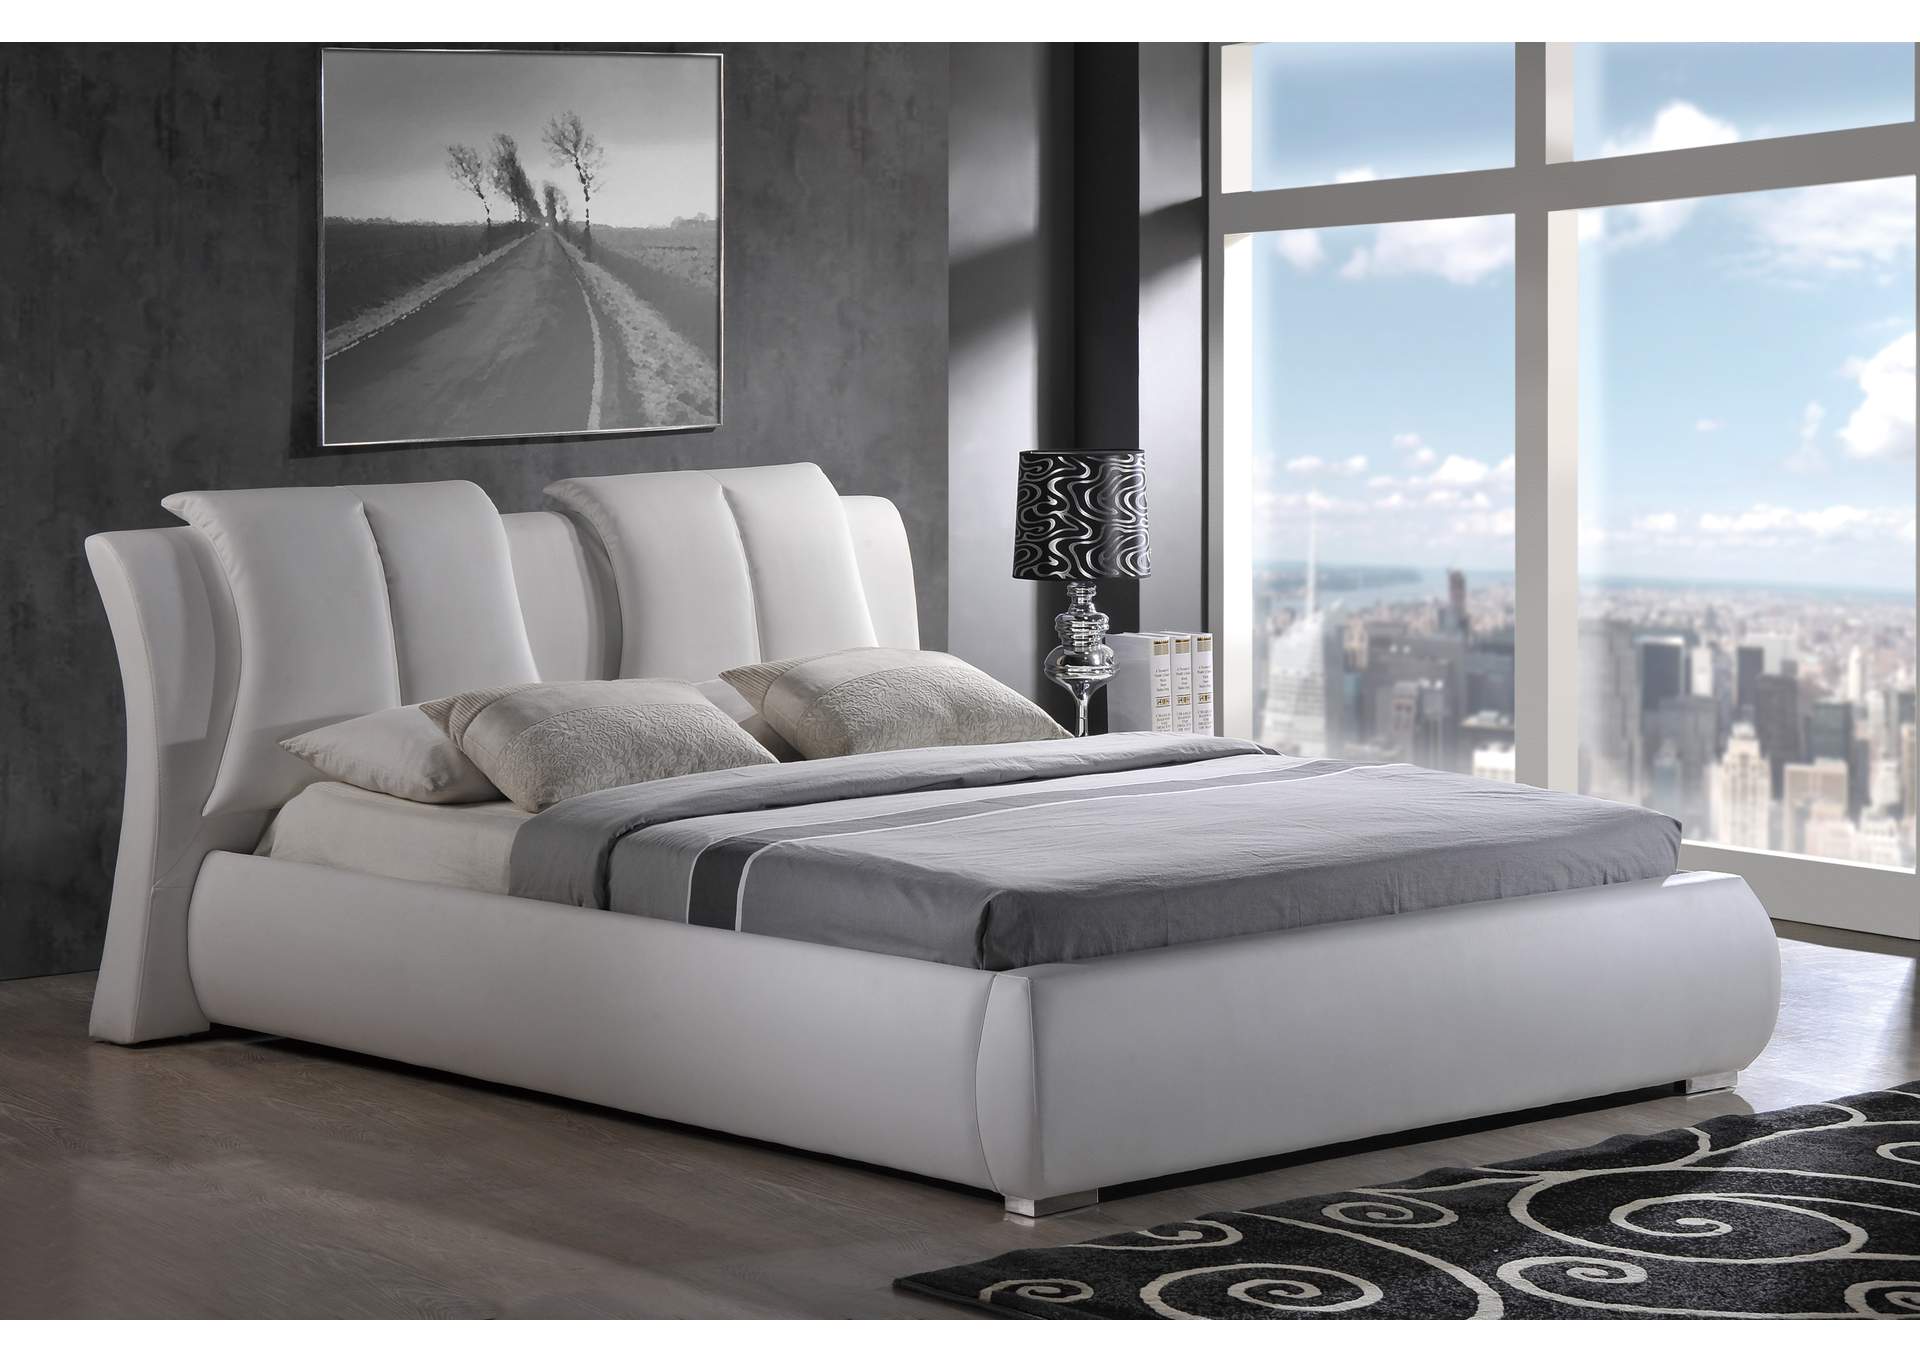 White King Bed,Global Furniture USA